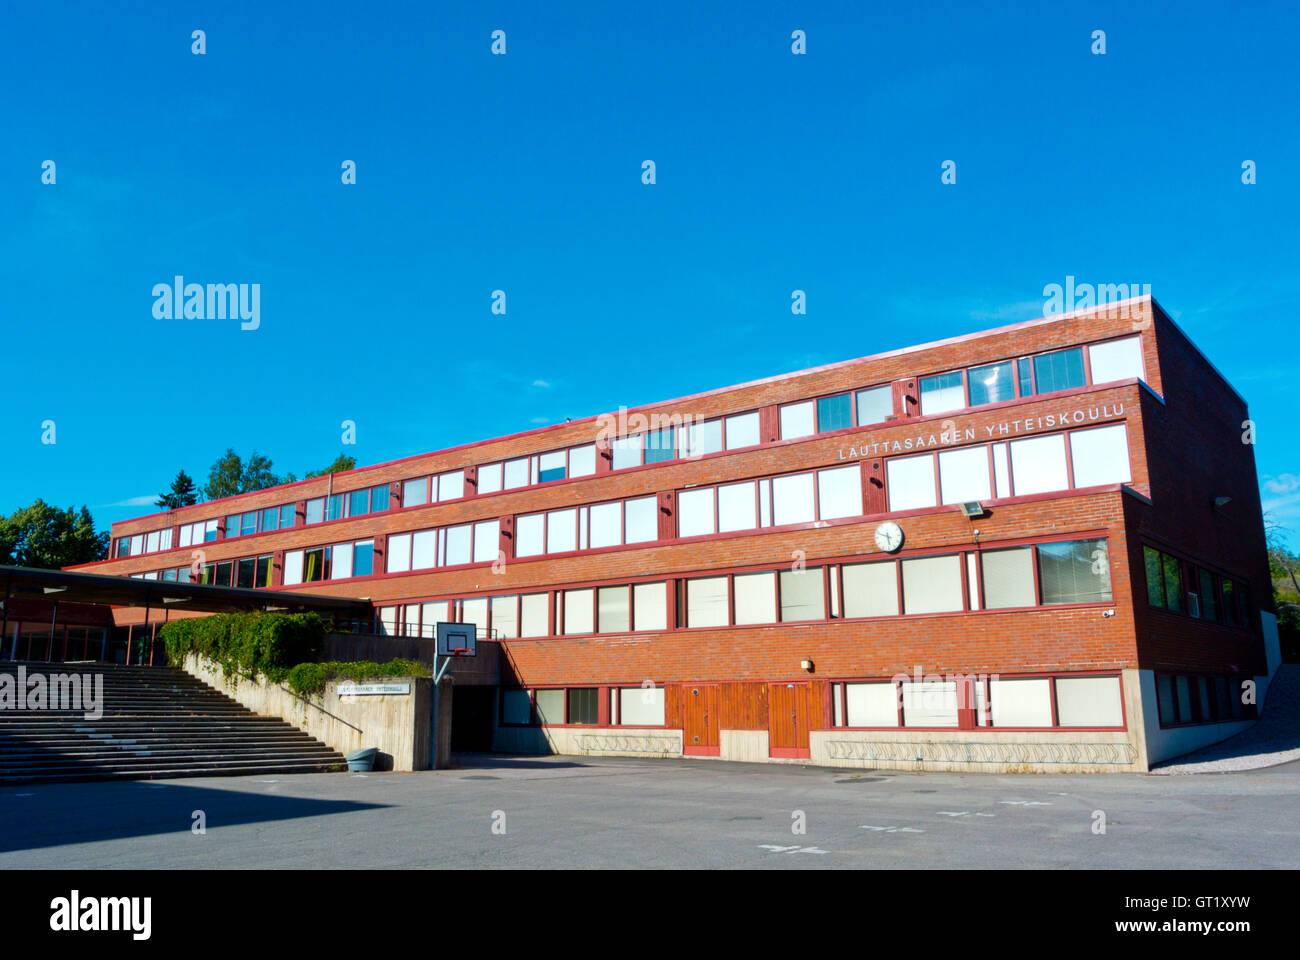 Lykki, Lauttasaaren Yhteiskoulu, completo scuola con la scuola media e la scuola secondaria, Lauttasaari, Helsinki, Finlandia Foto Stock